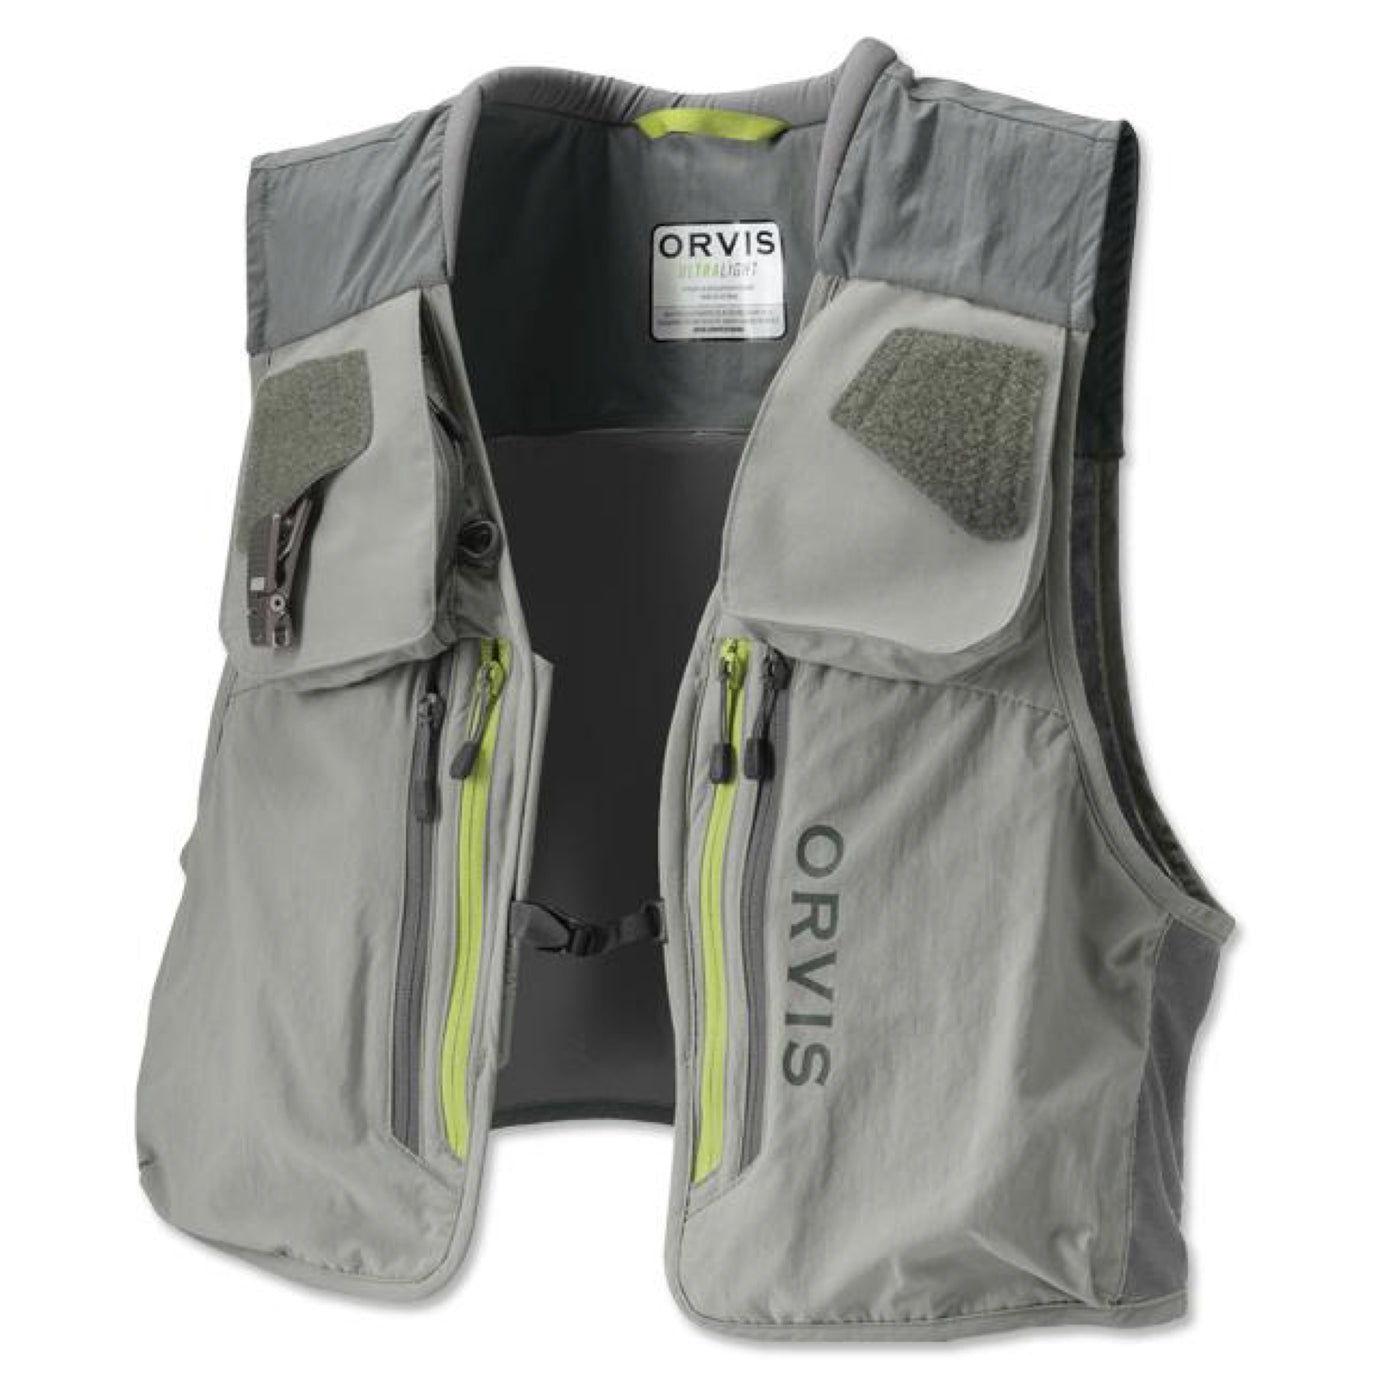 Flyfishing Adjustable Mesh Vest in Fishing Vests Men's